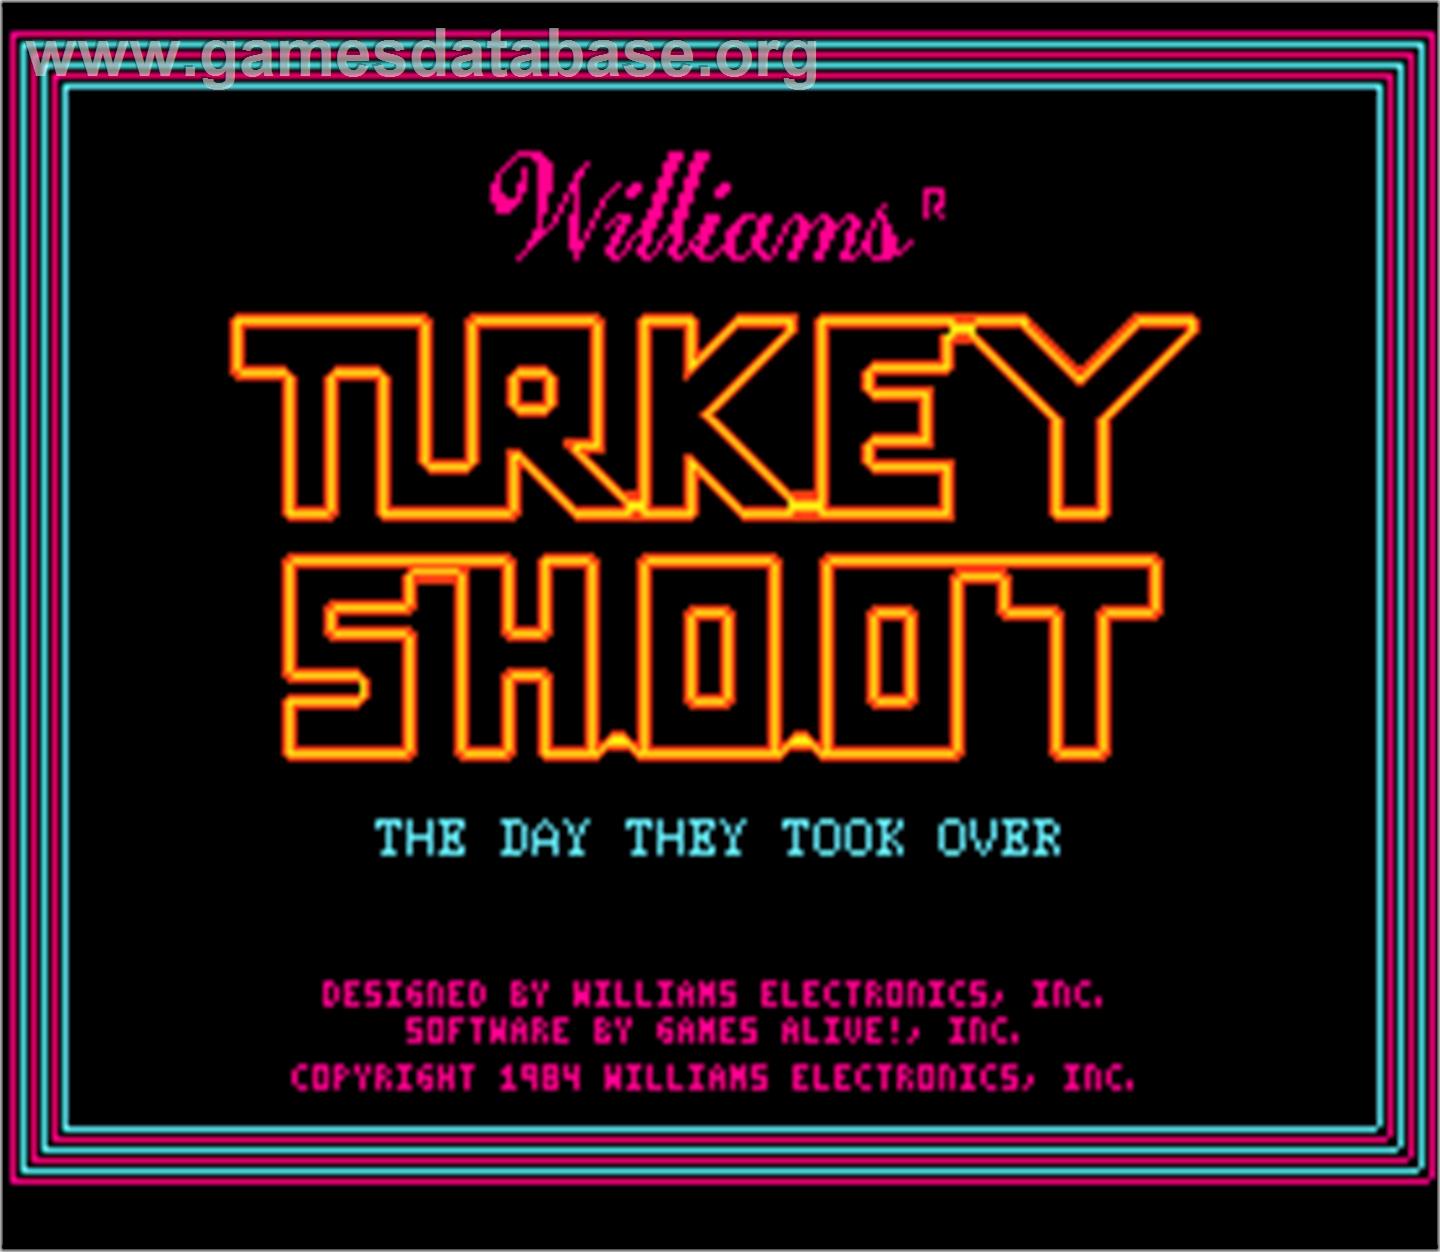 Turkey Shoot - Arcade - Artwork - Title Screen